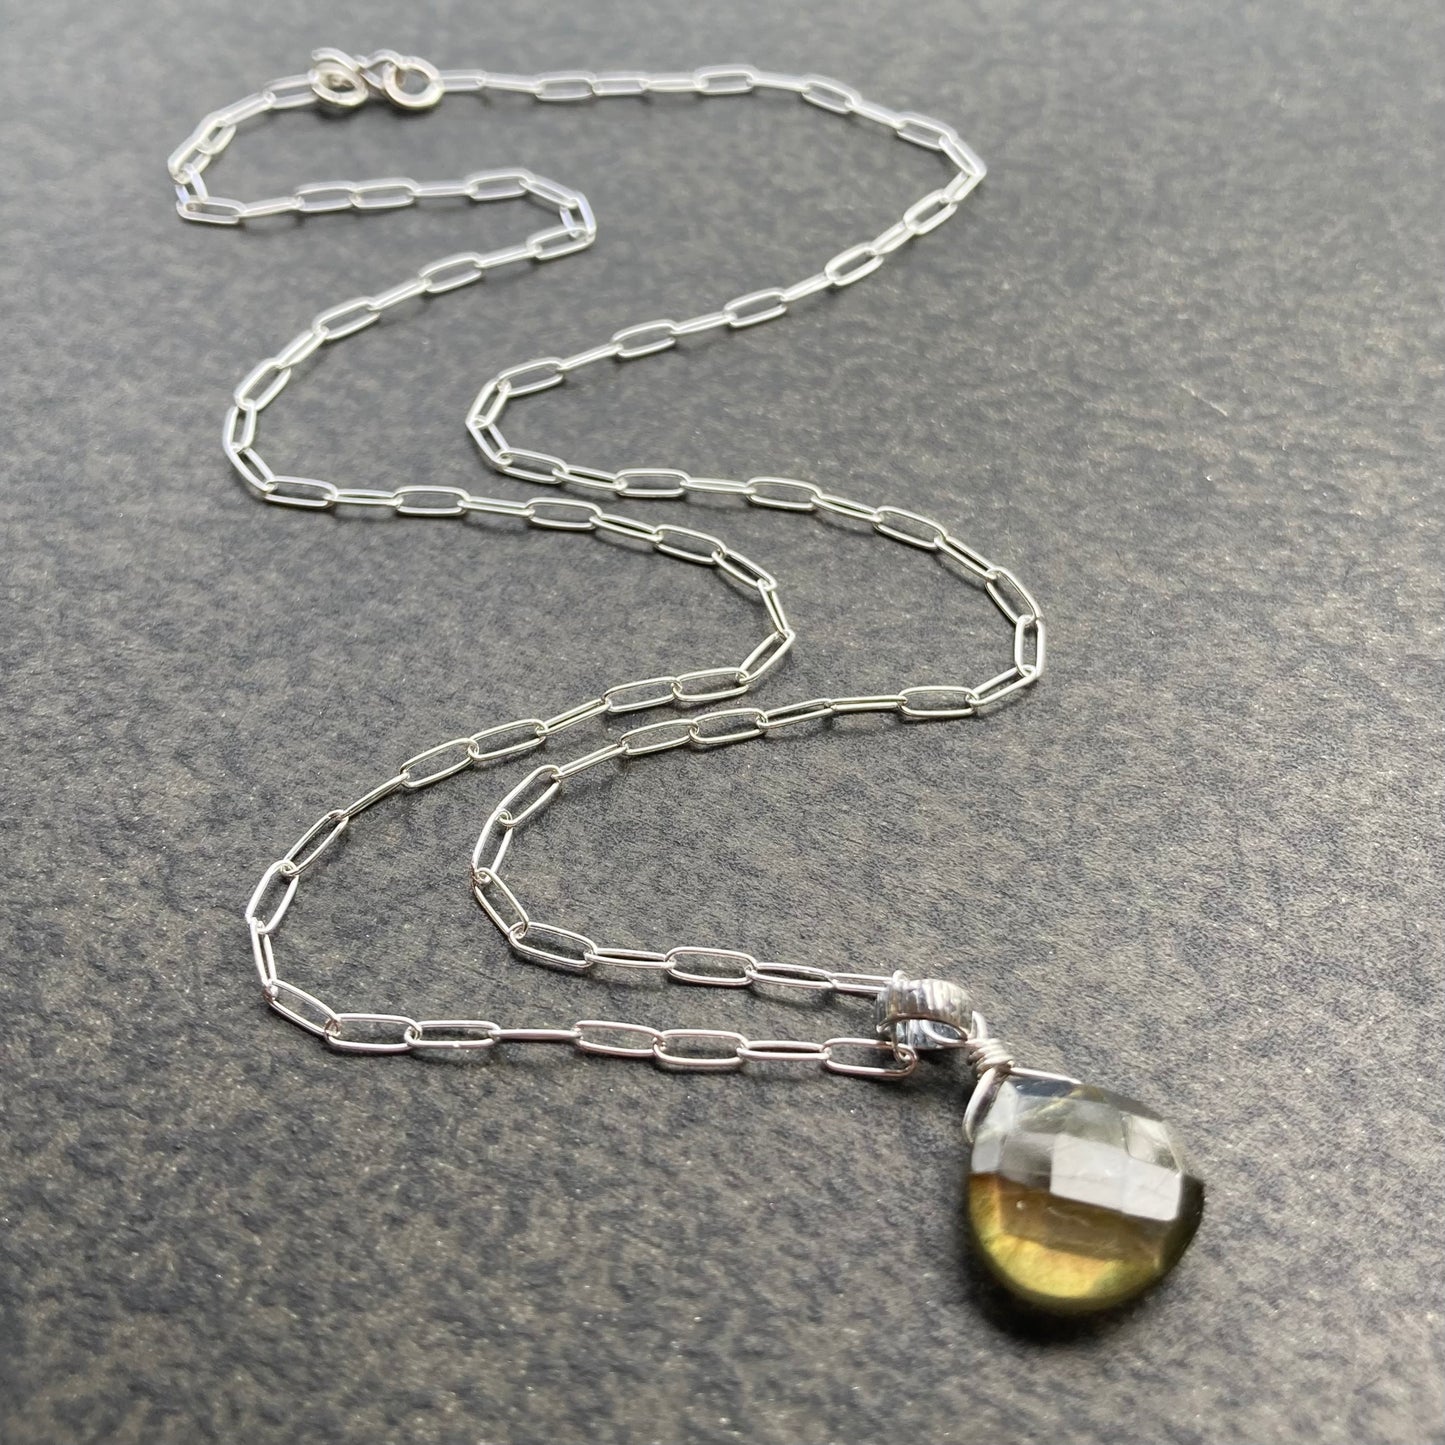 Labradorite & Sterling Silver Pendant Necklace 18”